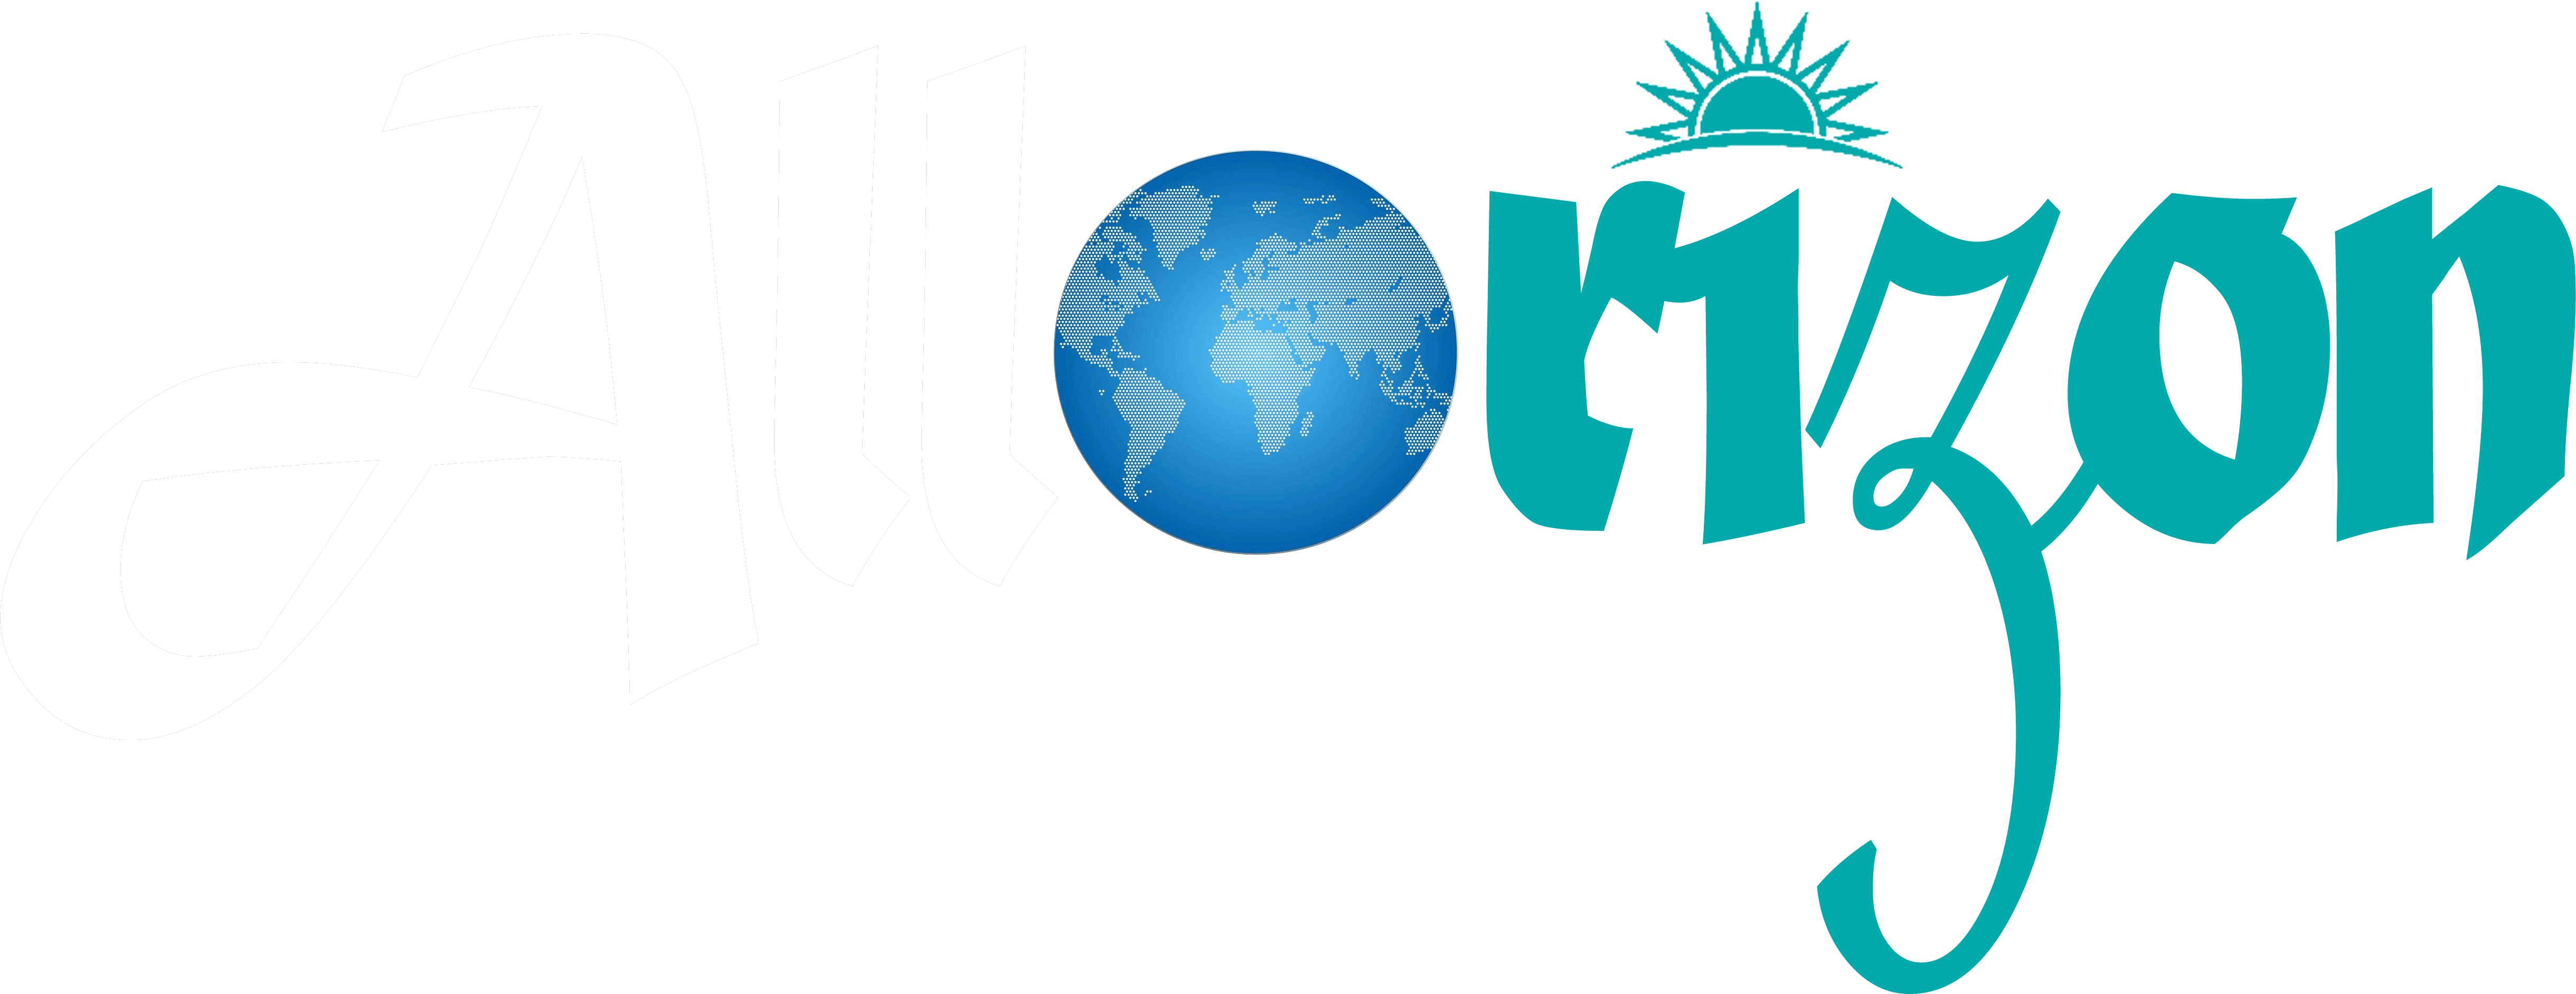 logo de Allorizon white